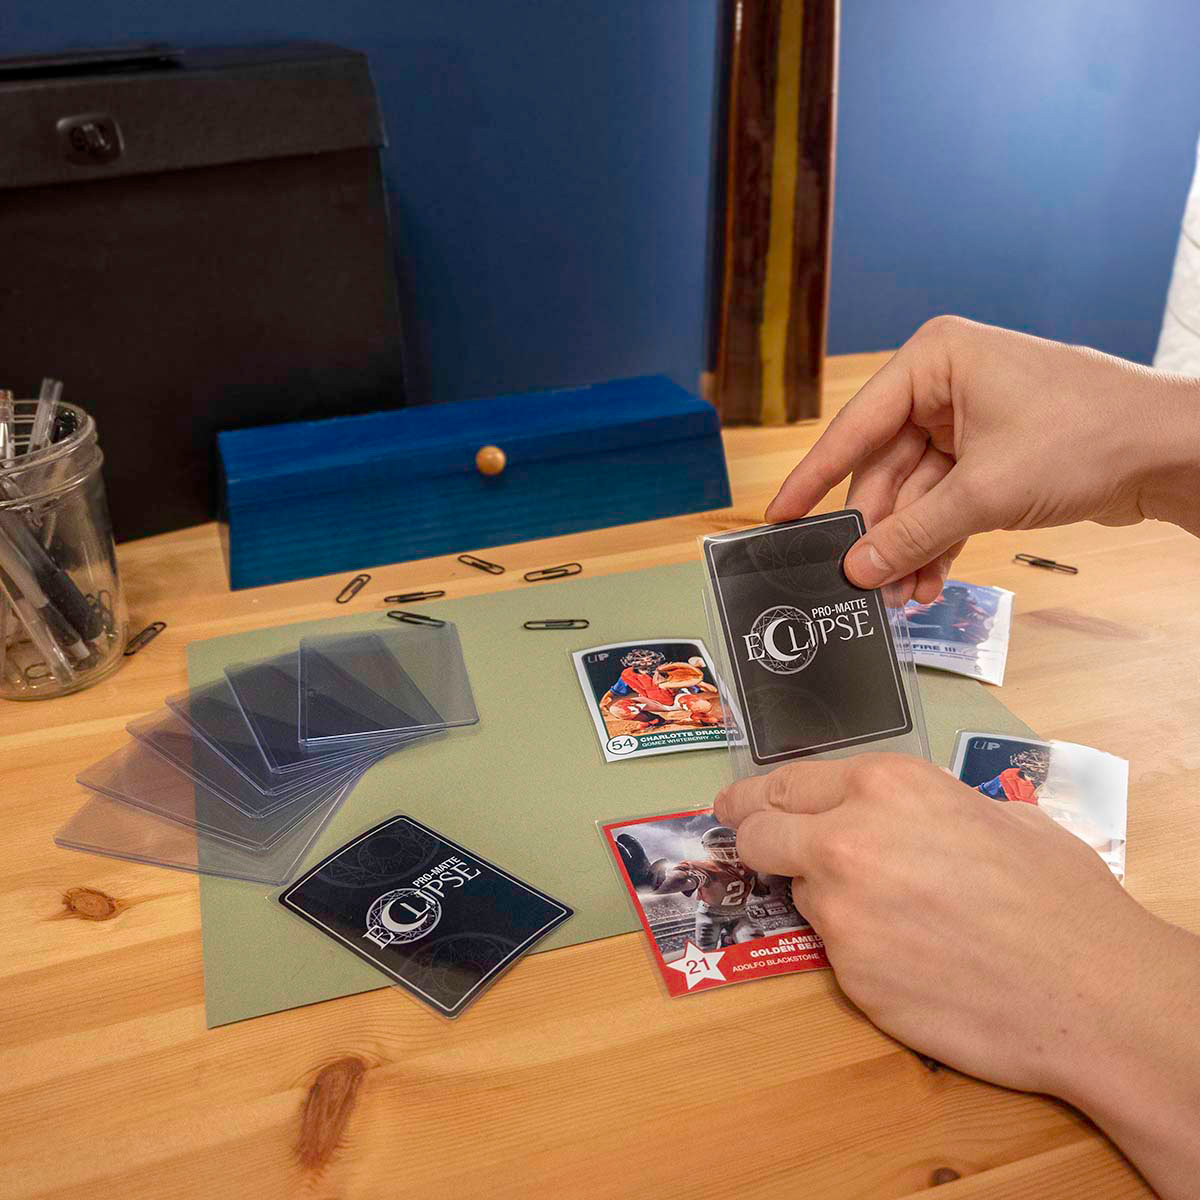 Ultra Pro Standard Card Sleeves Dark Blue (100 pack)